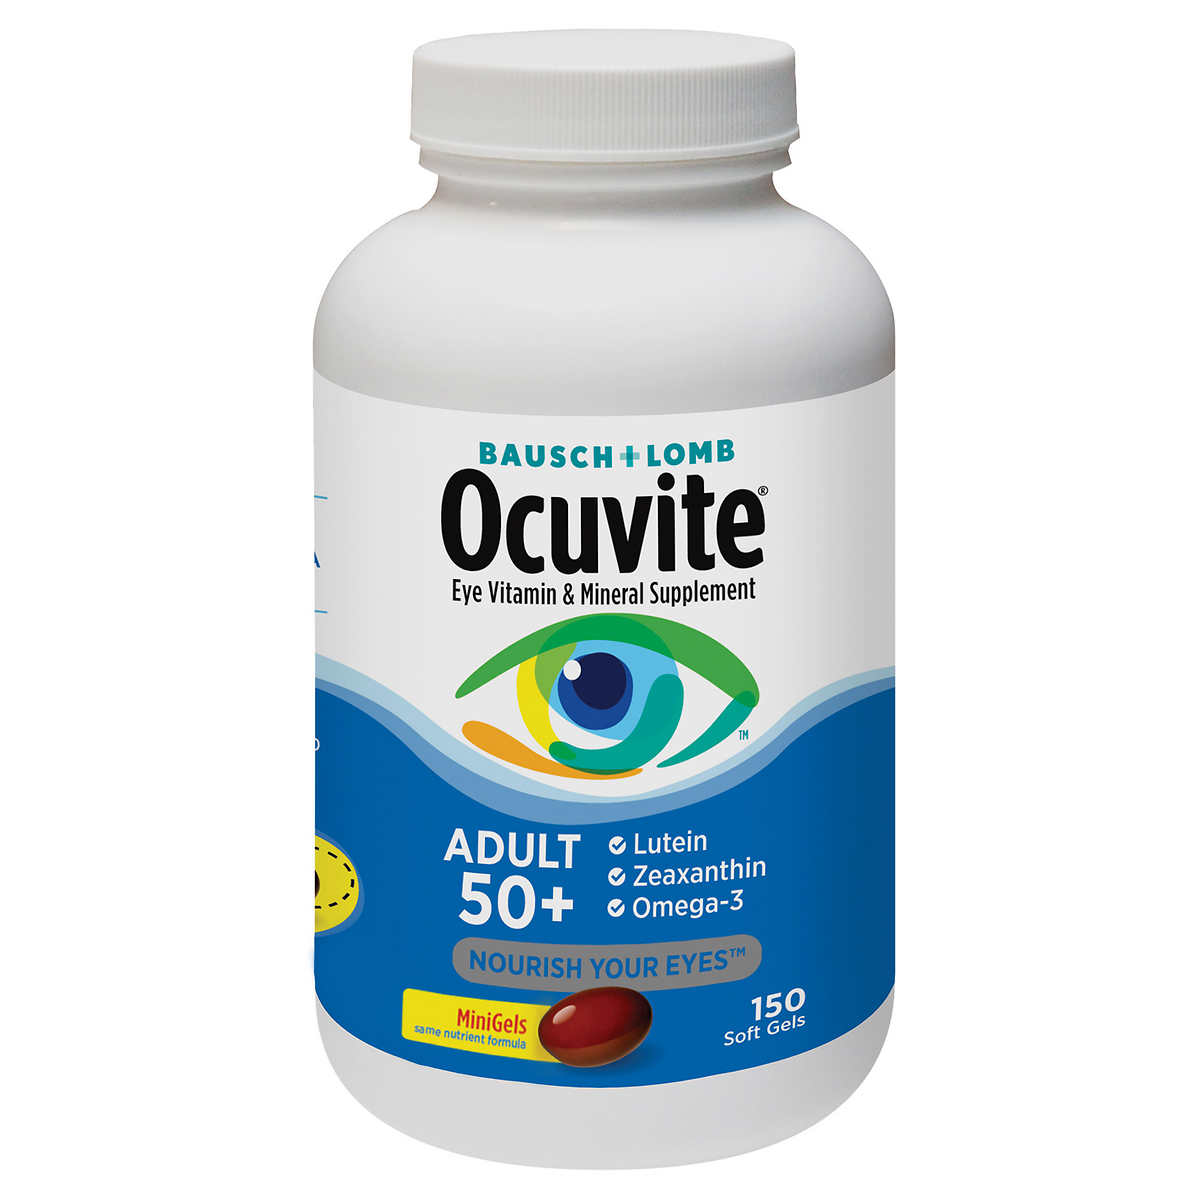 Octuvite Ocuvite Adult 50+, 150 Soft Gels